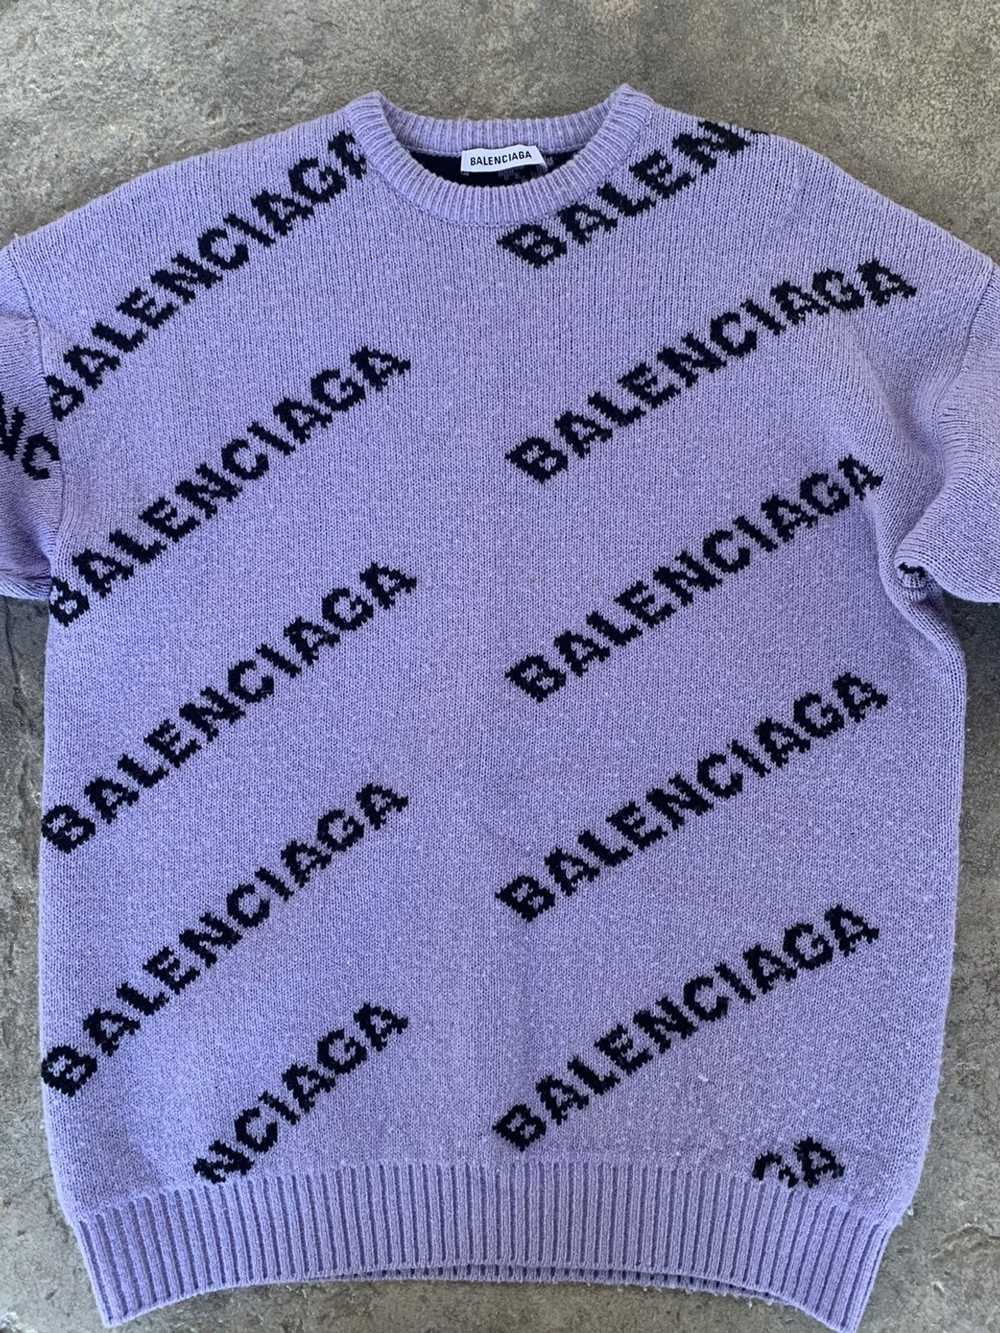 Balenciaga All Over Print Sweater - image 2